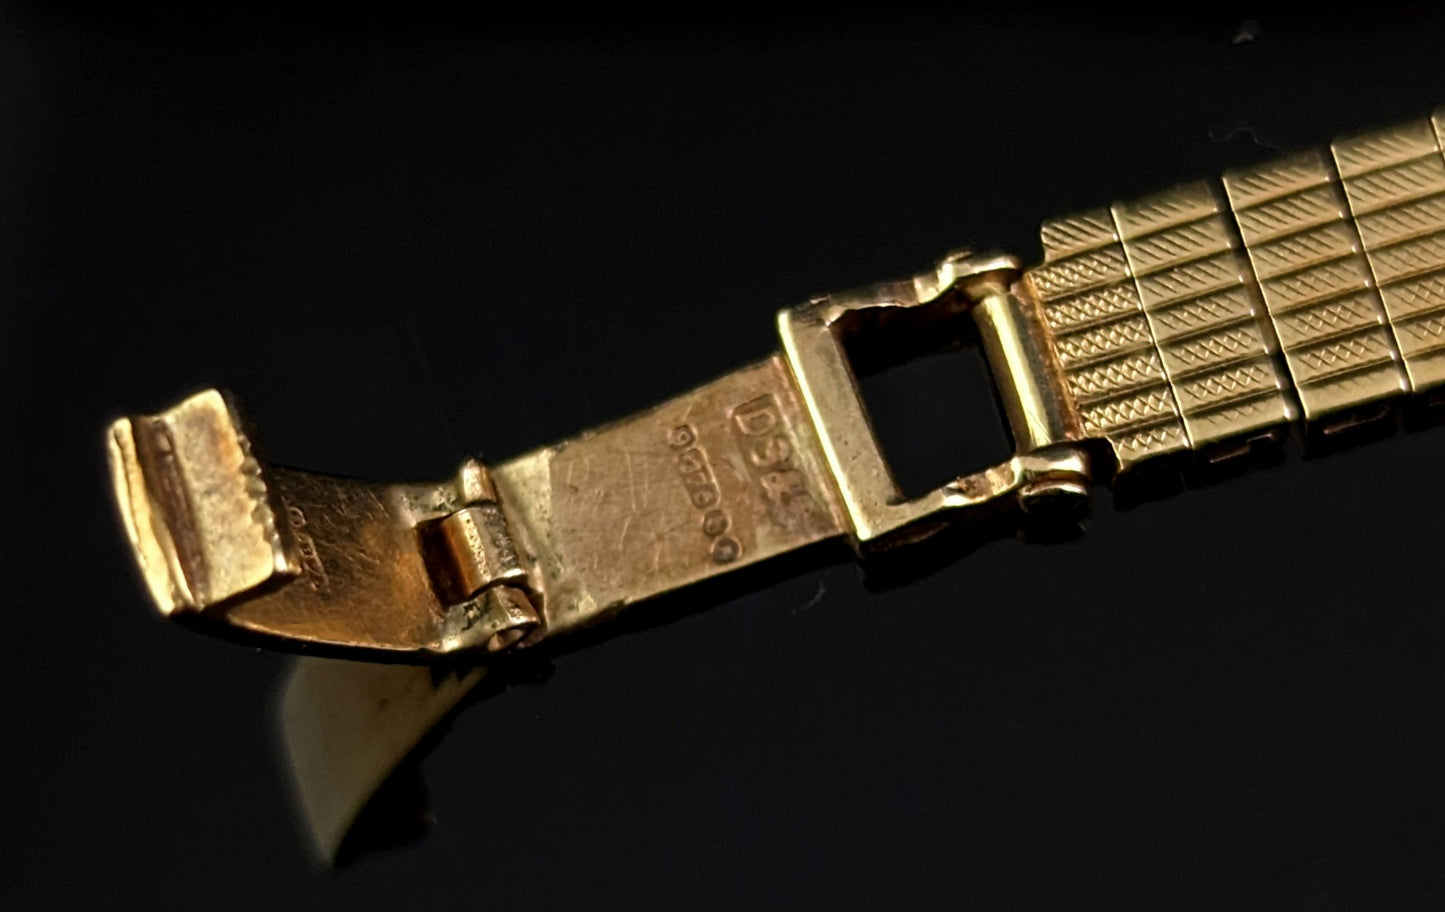 Vintage 9ct gold Ladies Rolex precision wristwatch, boxed watch